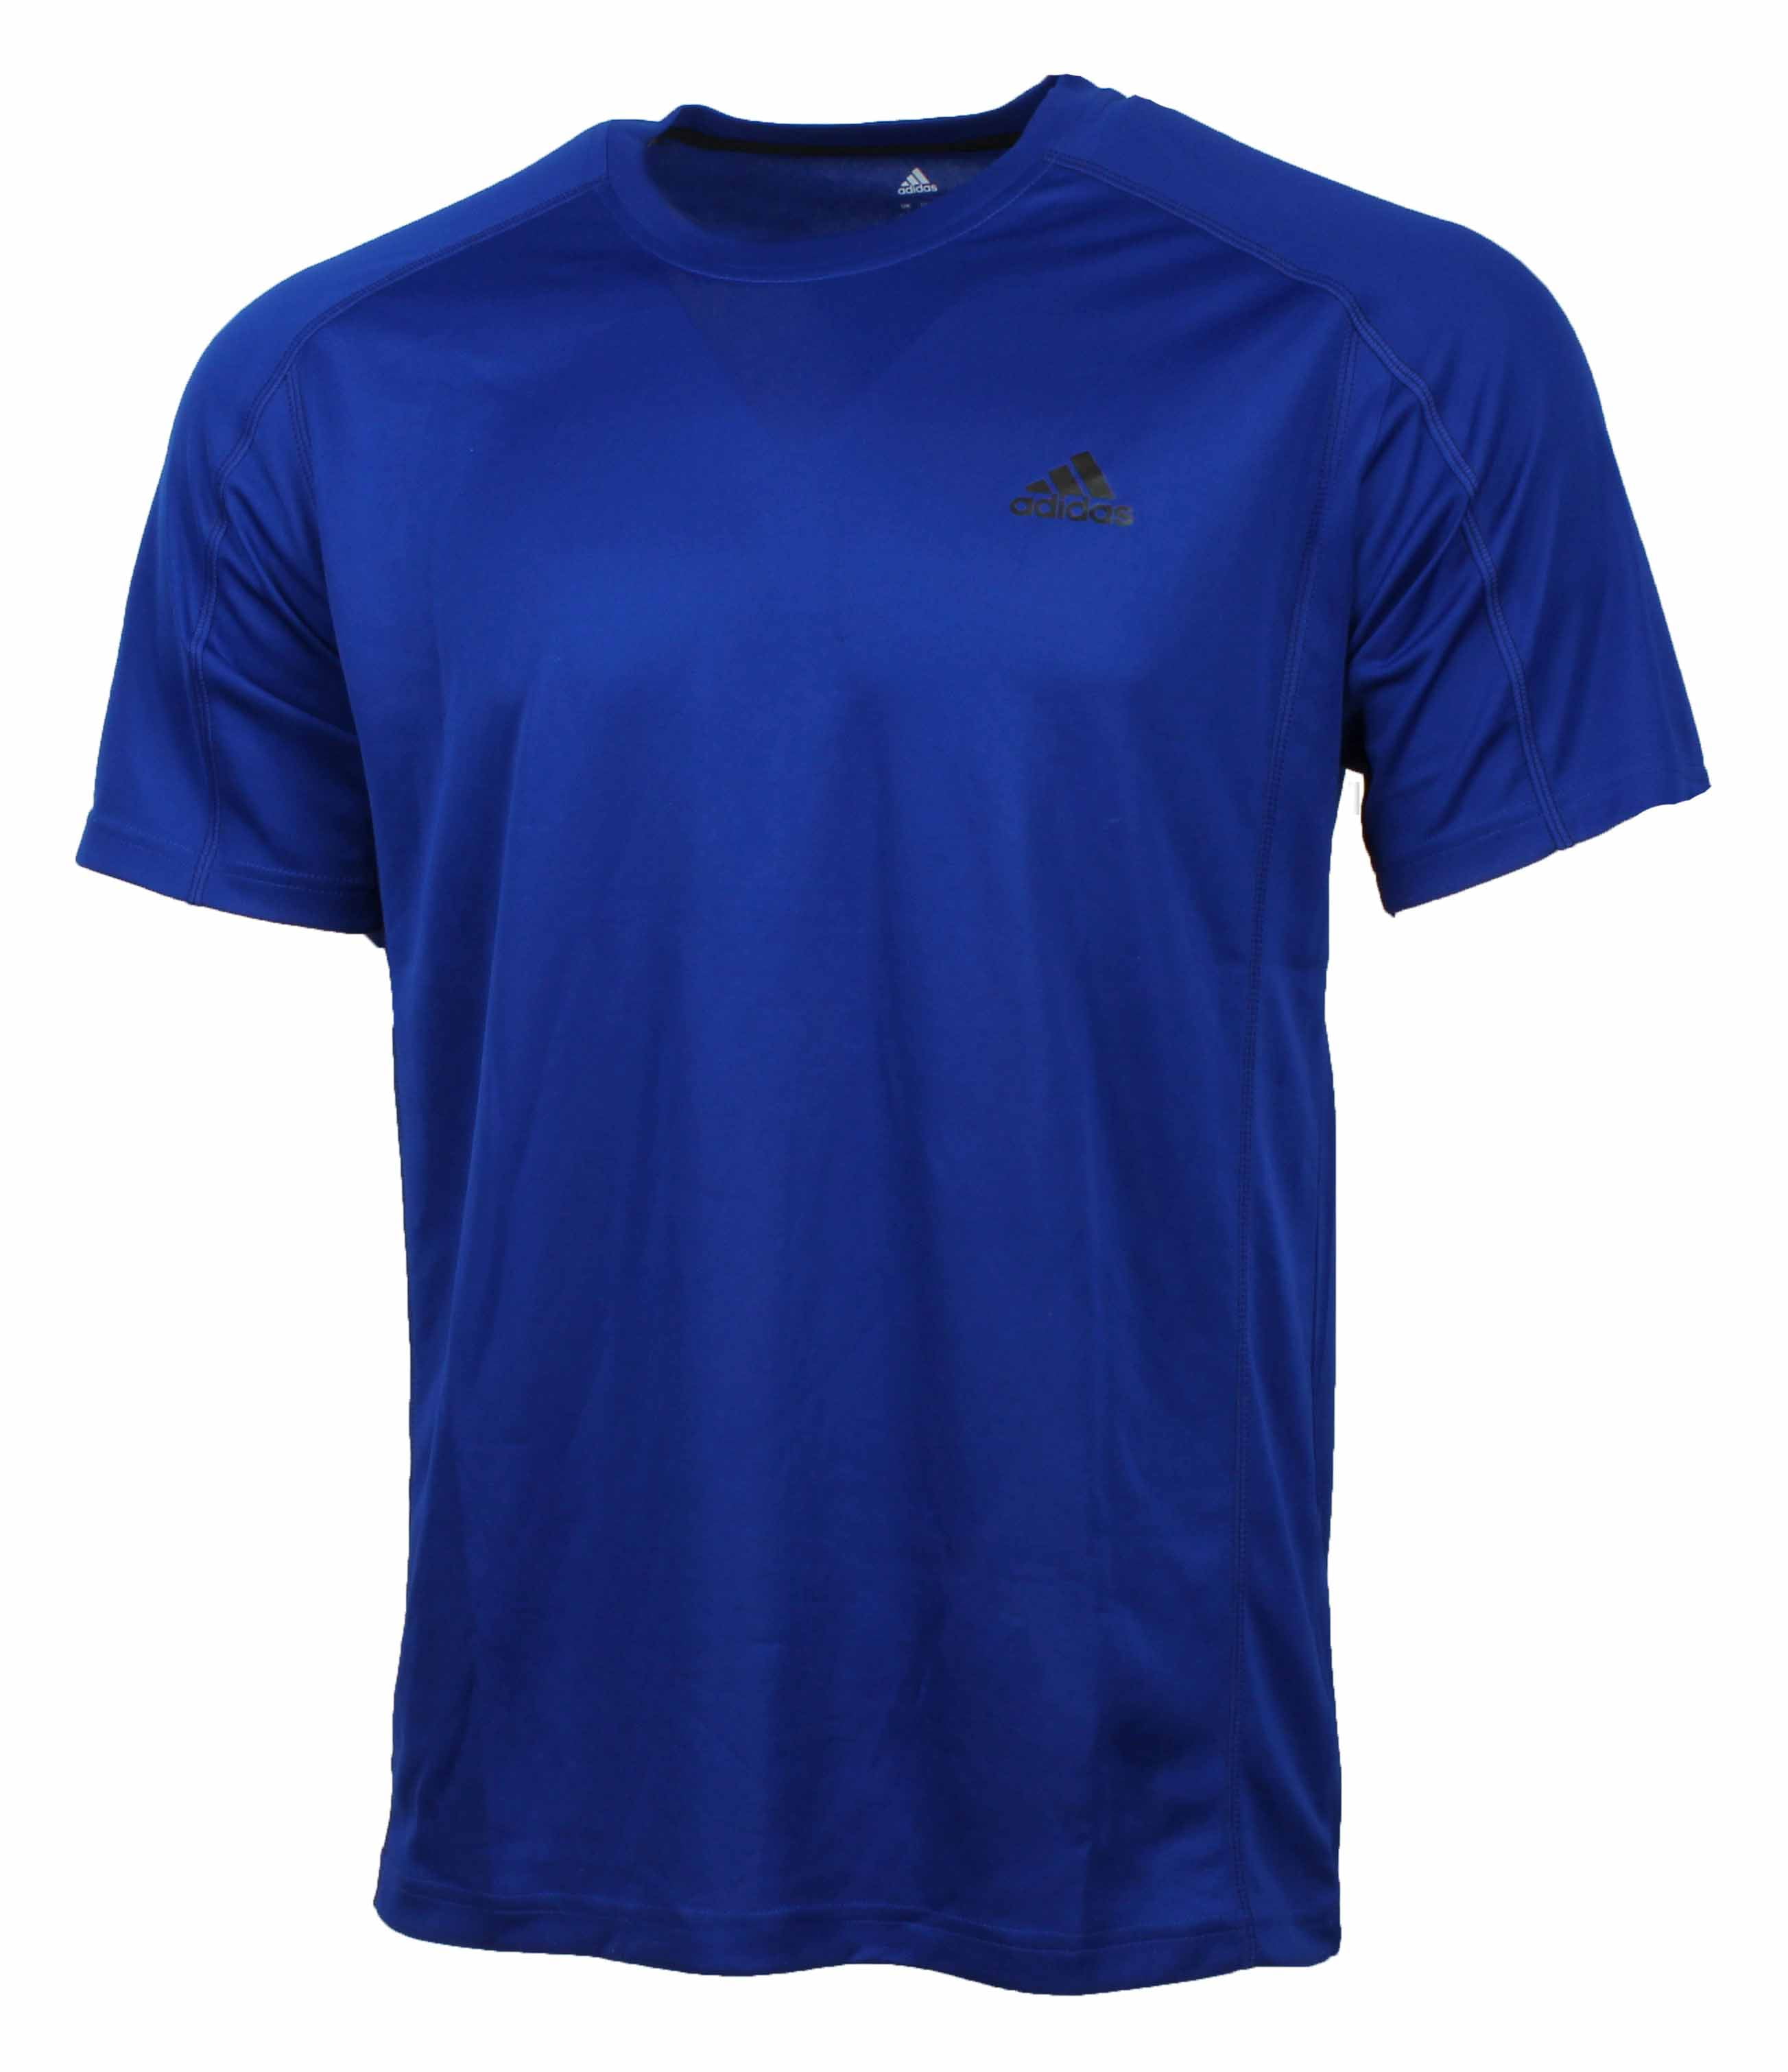 Mens Short Sleeve Poly T-Shirt (Collegiate Royal/Black, 2XL) - Walmart.com